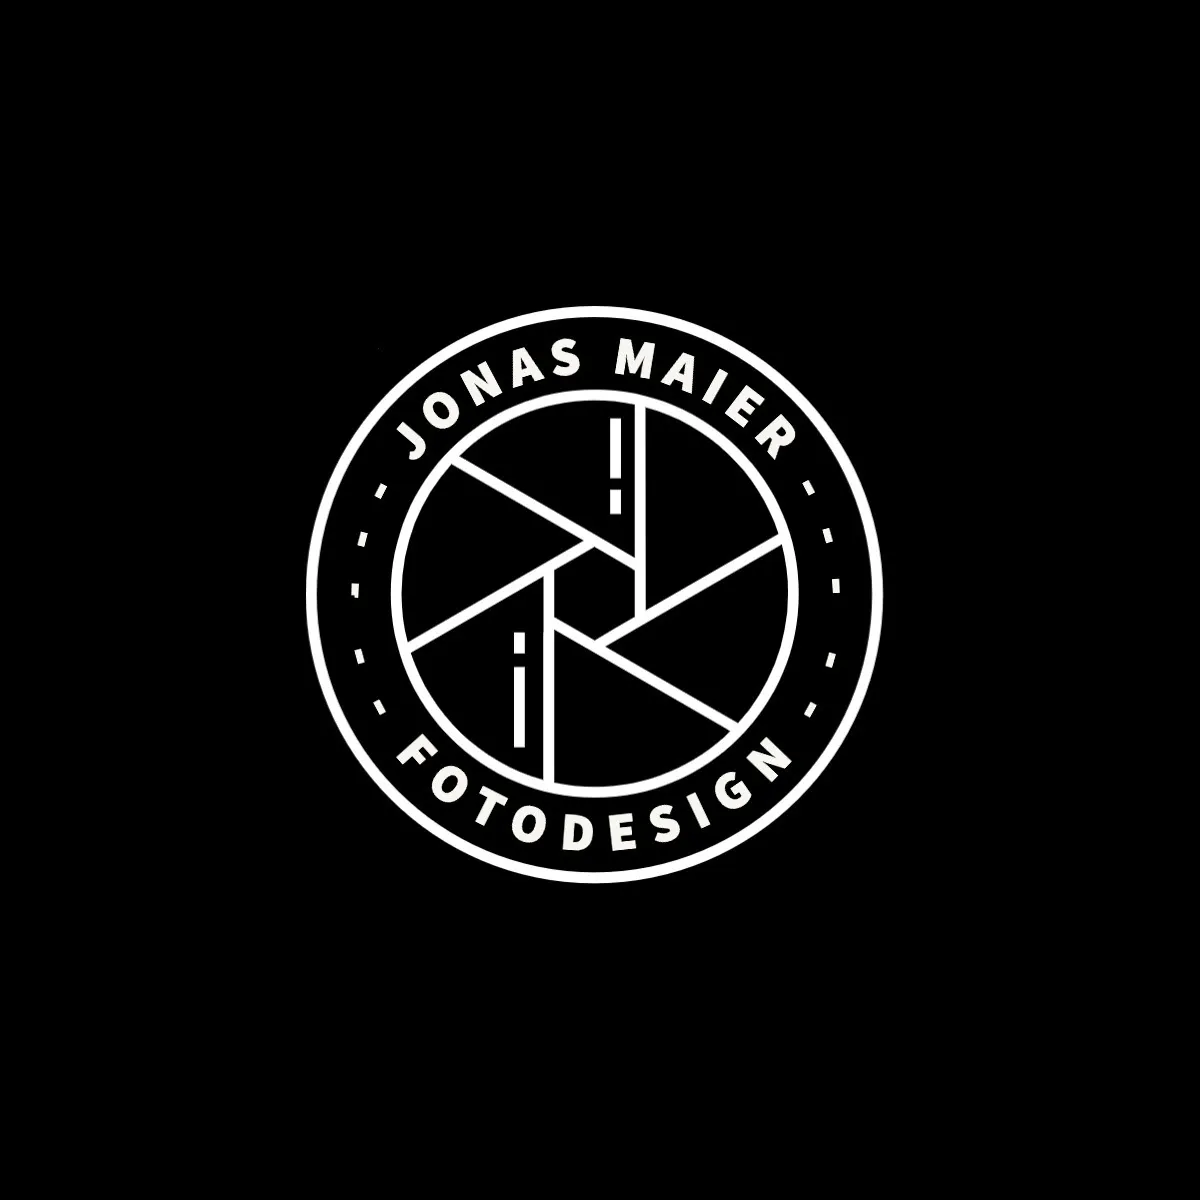 Black and White Camera Lense Logo